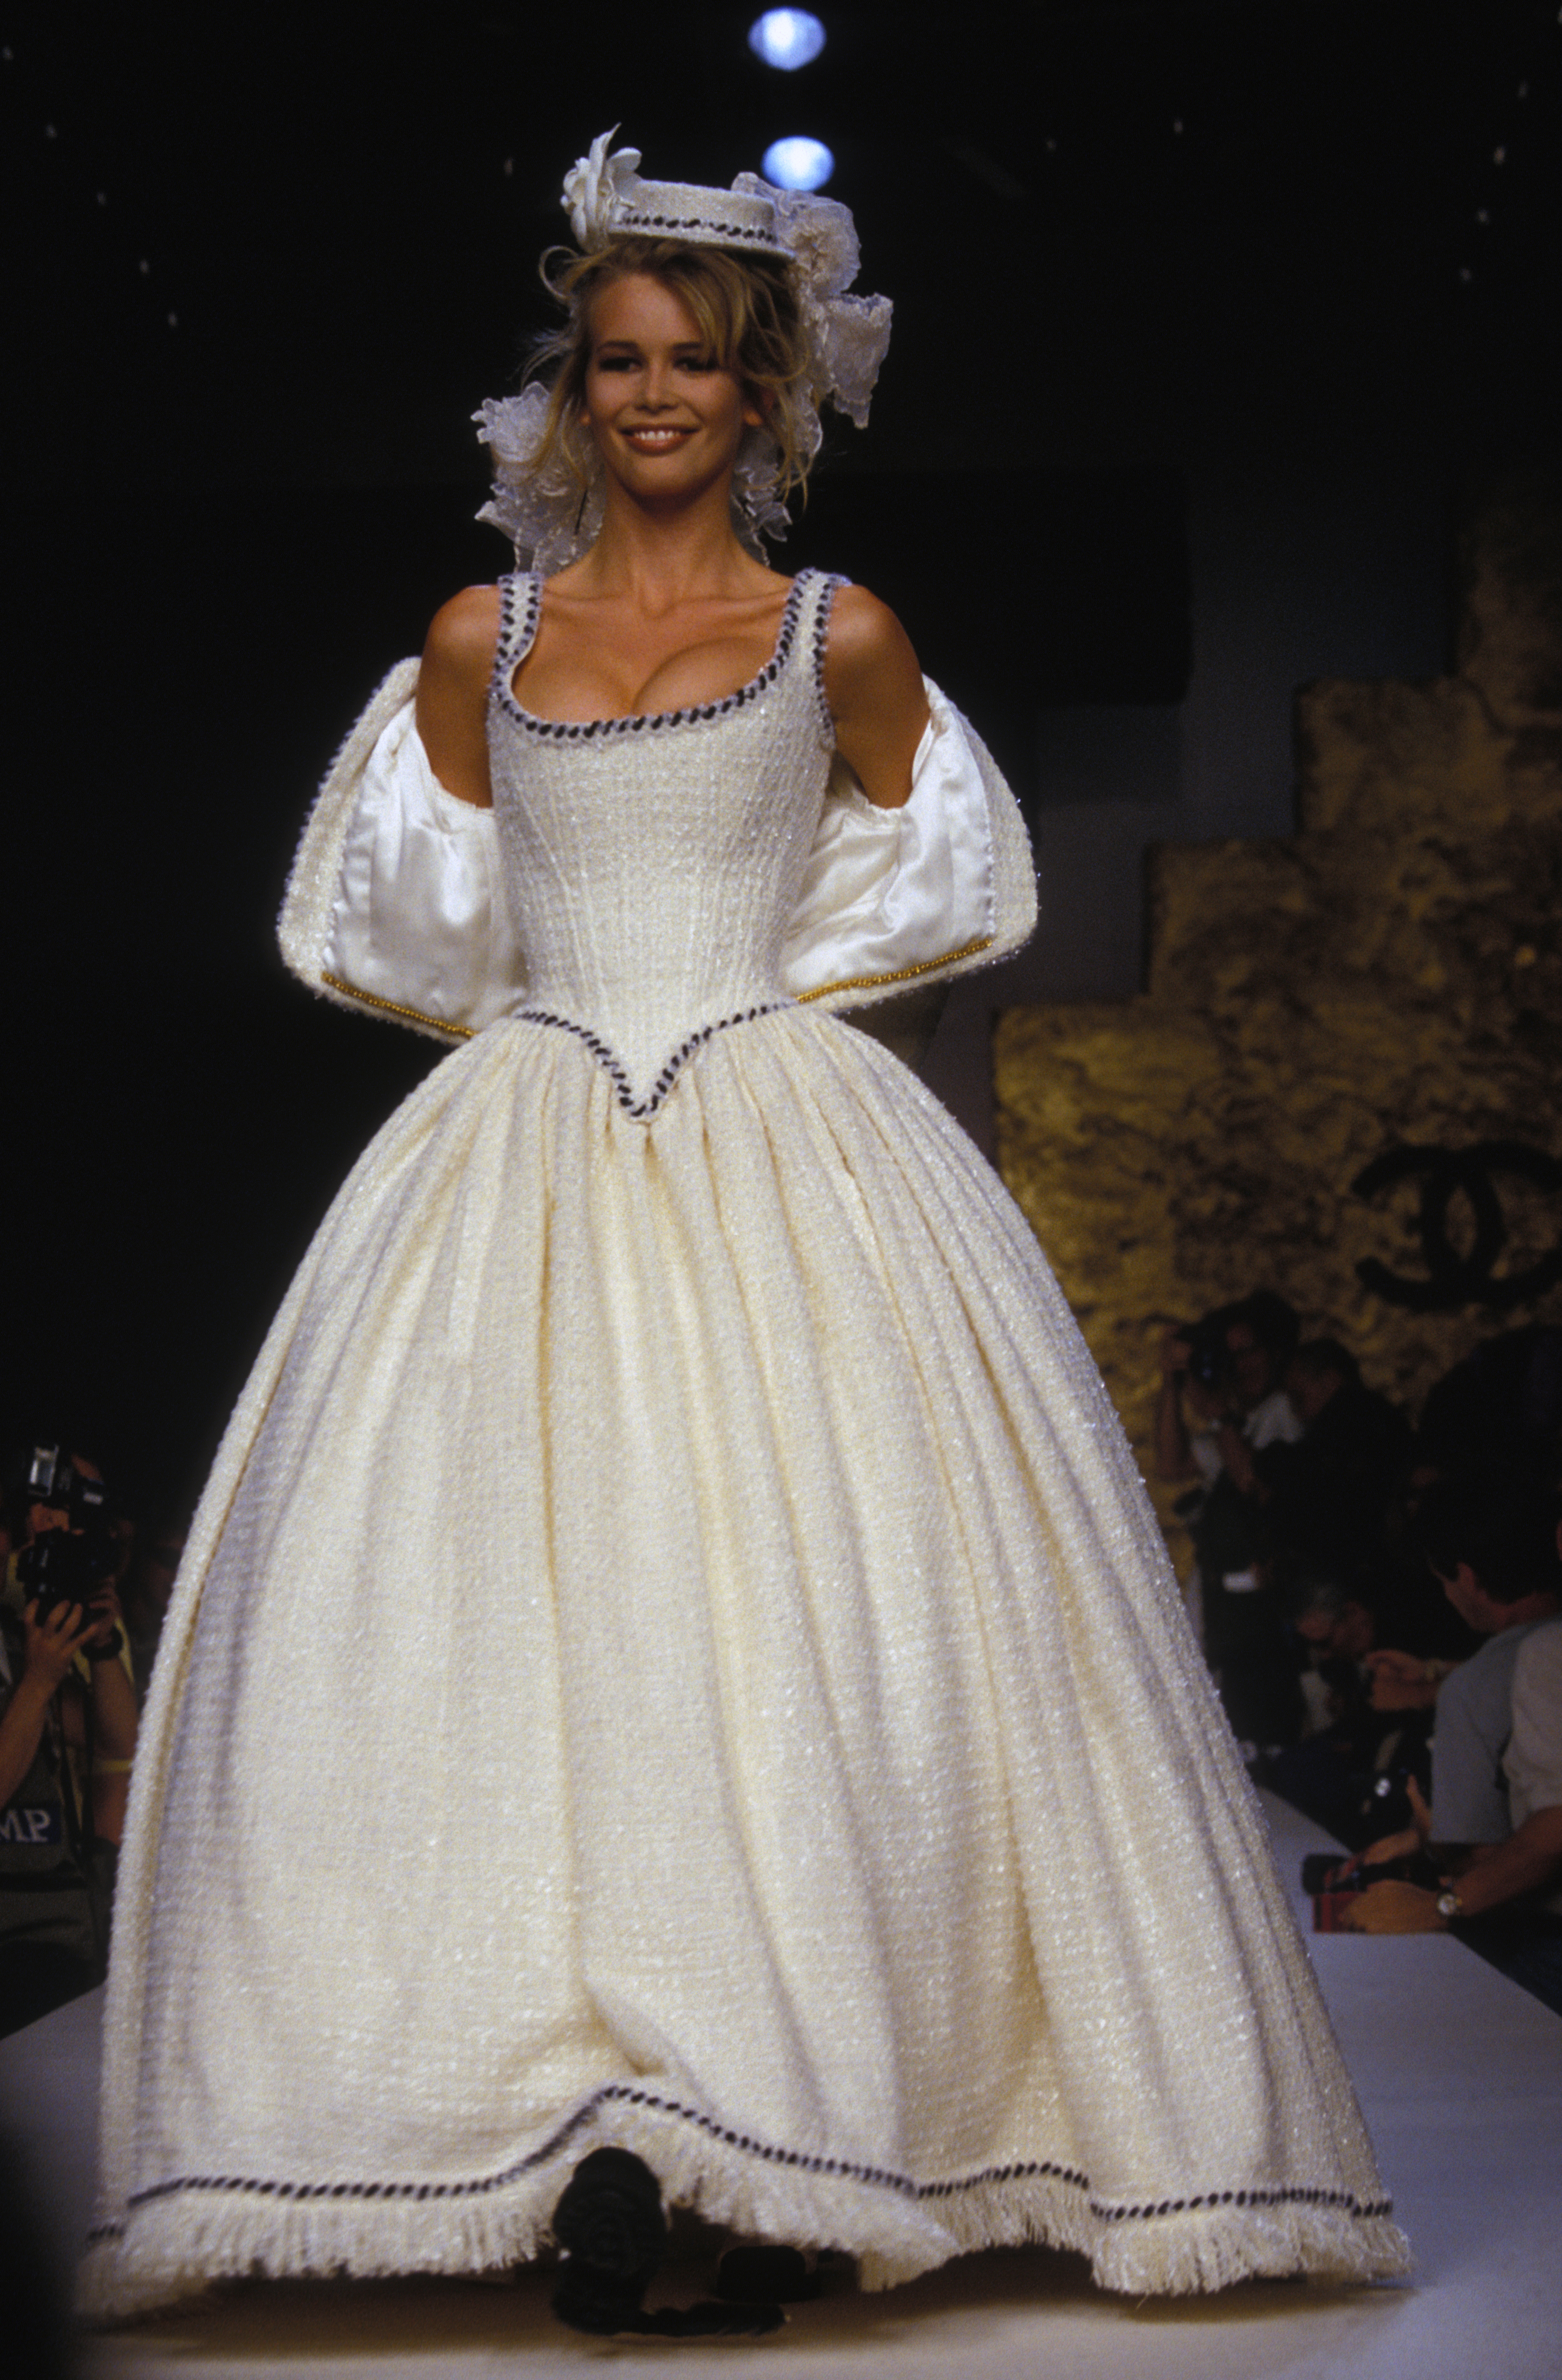 Dua Lipa Wore a '90s Chanel Wedding Dress to the Met Gala